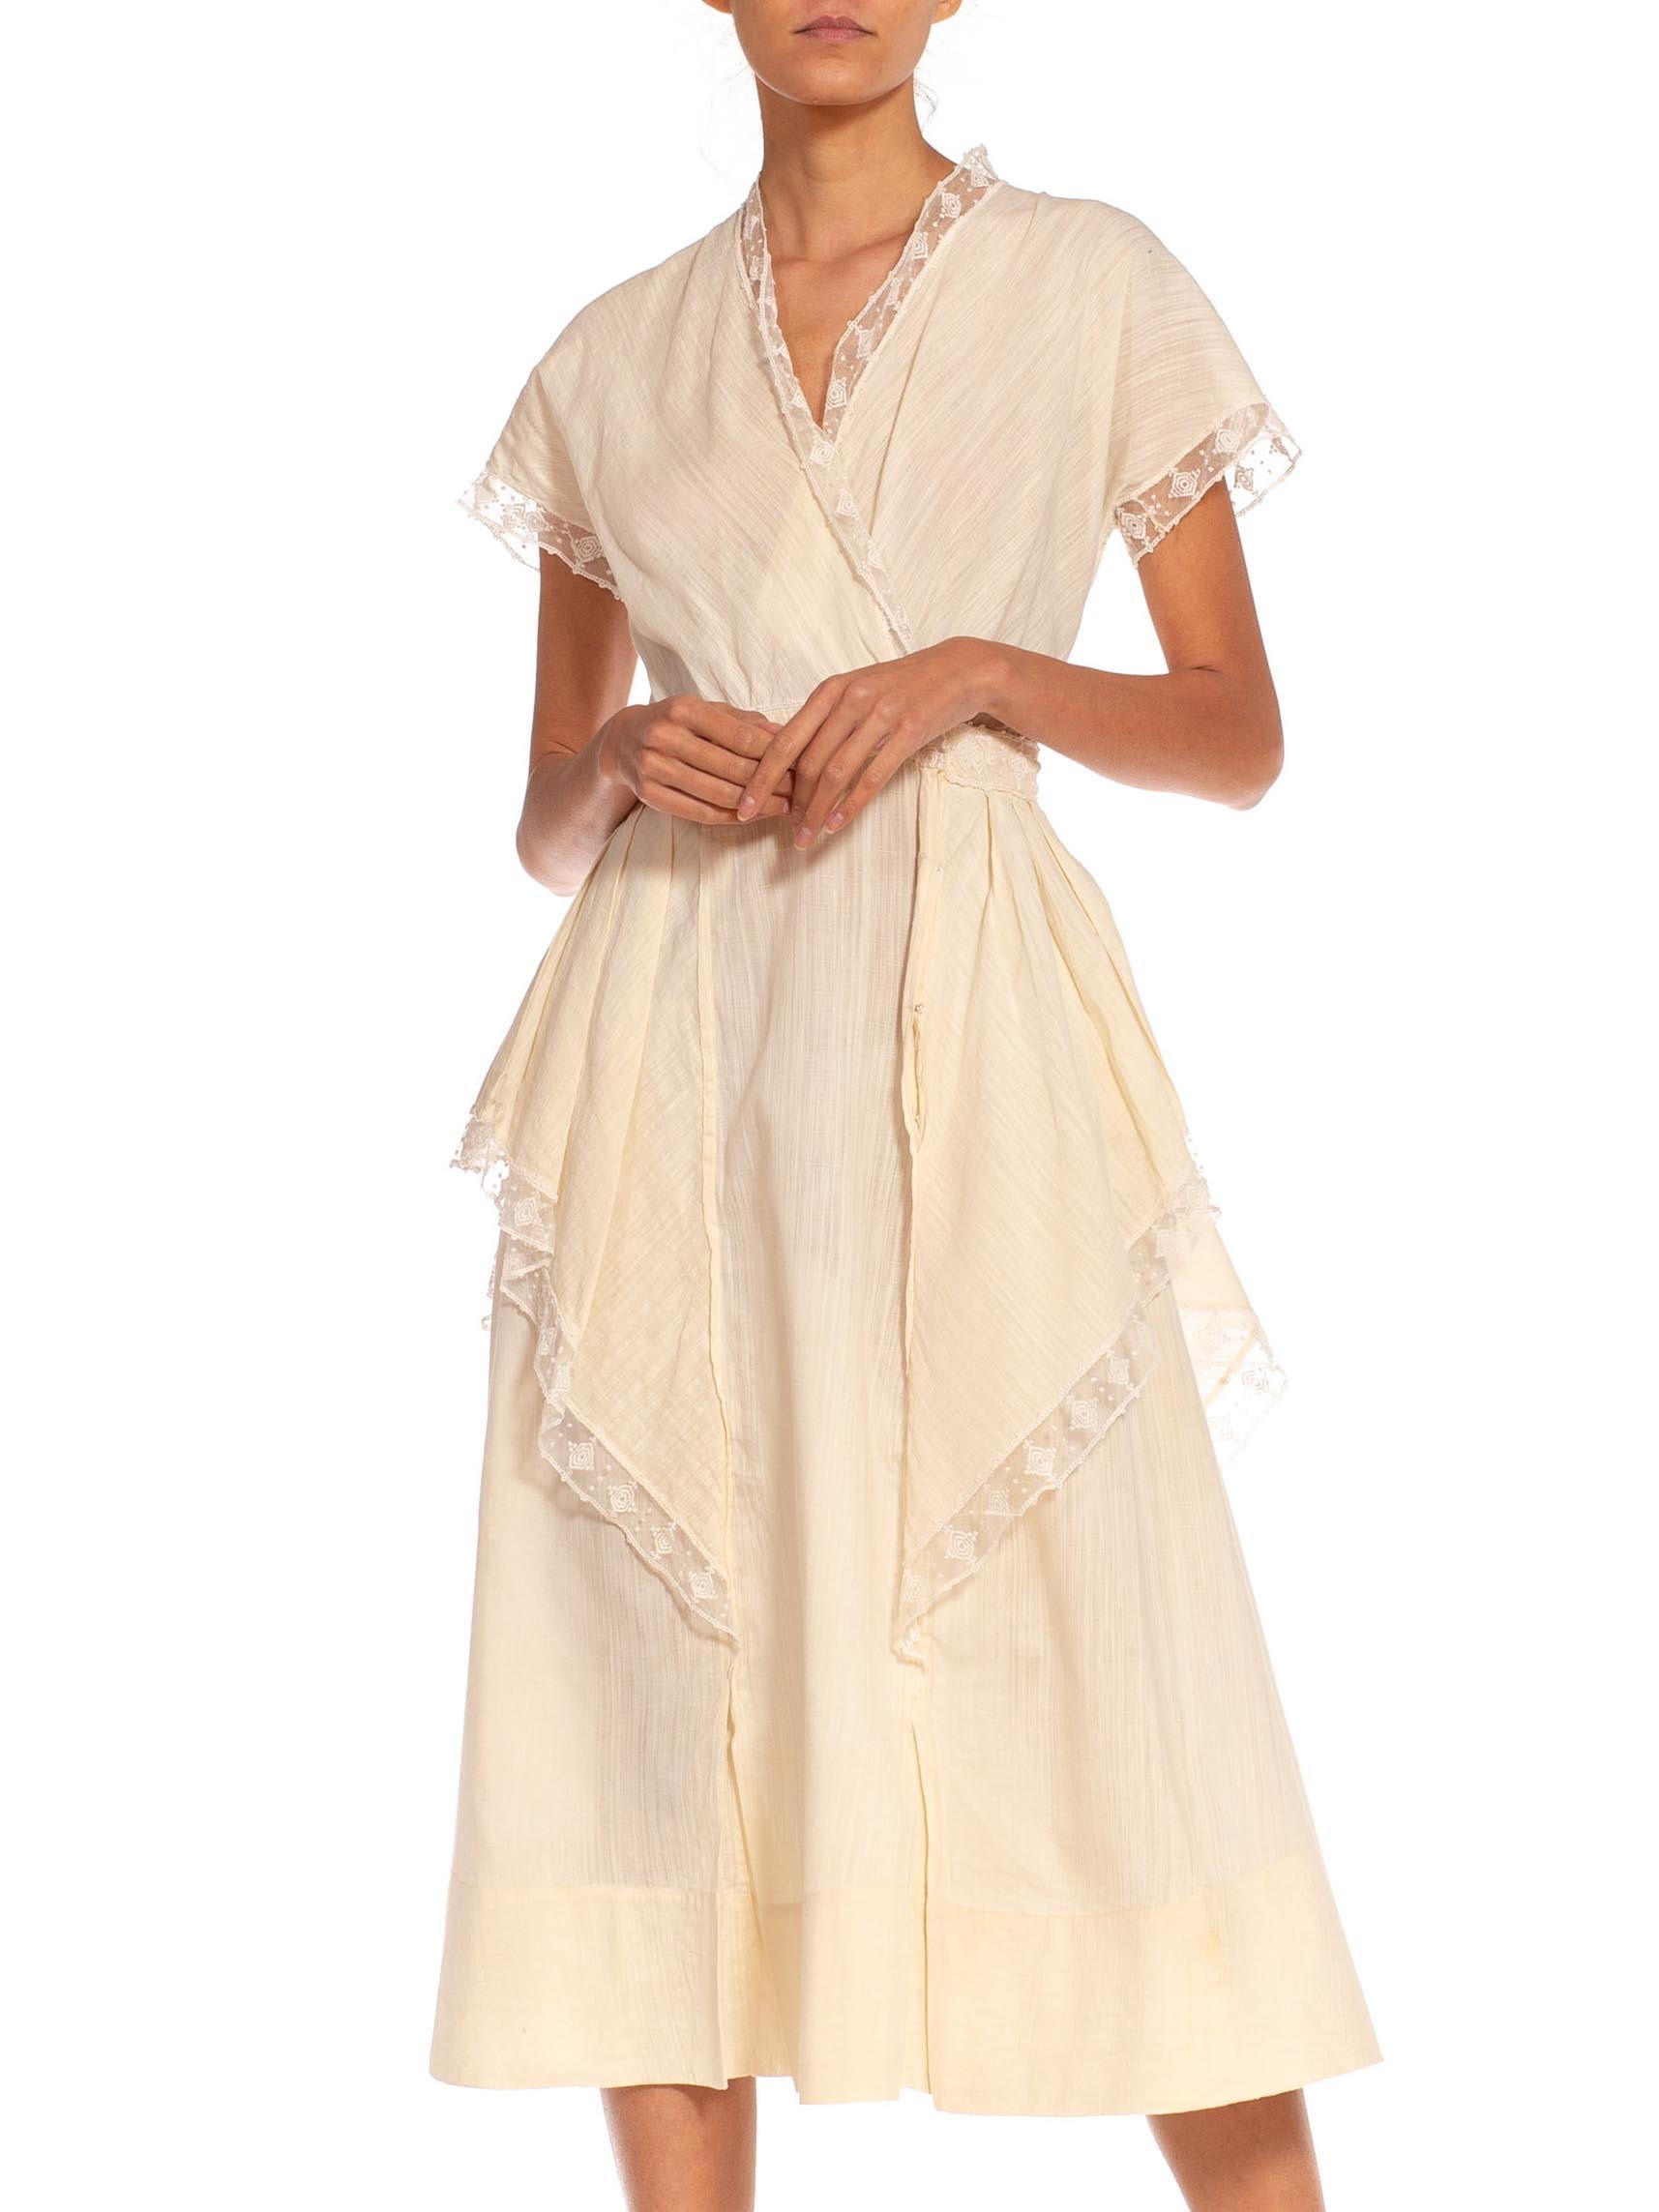 Edwardian Off White Silk Cotton & Lace Trim Day Dress 3